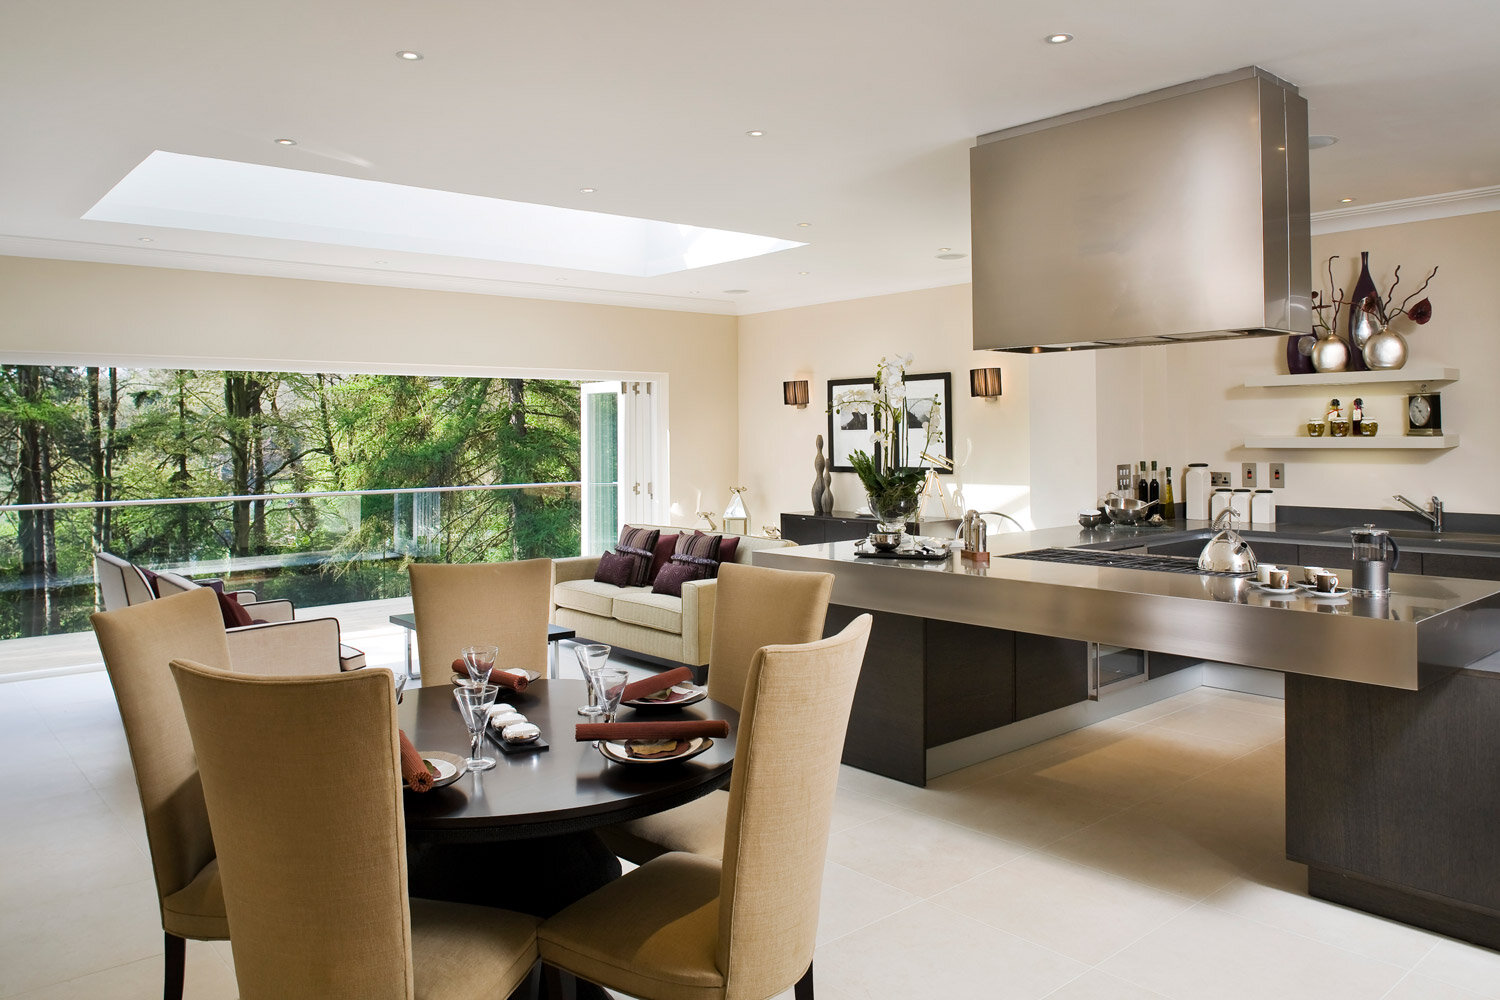 luxury-kitchen-by-visualeye